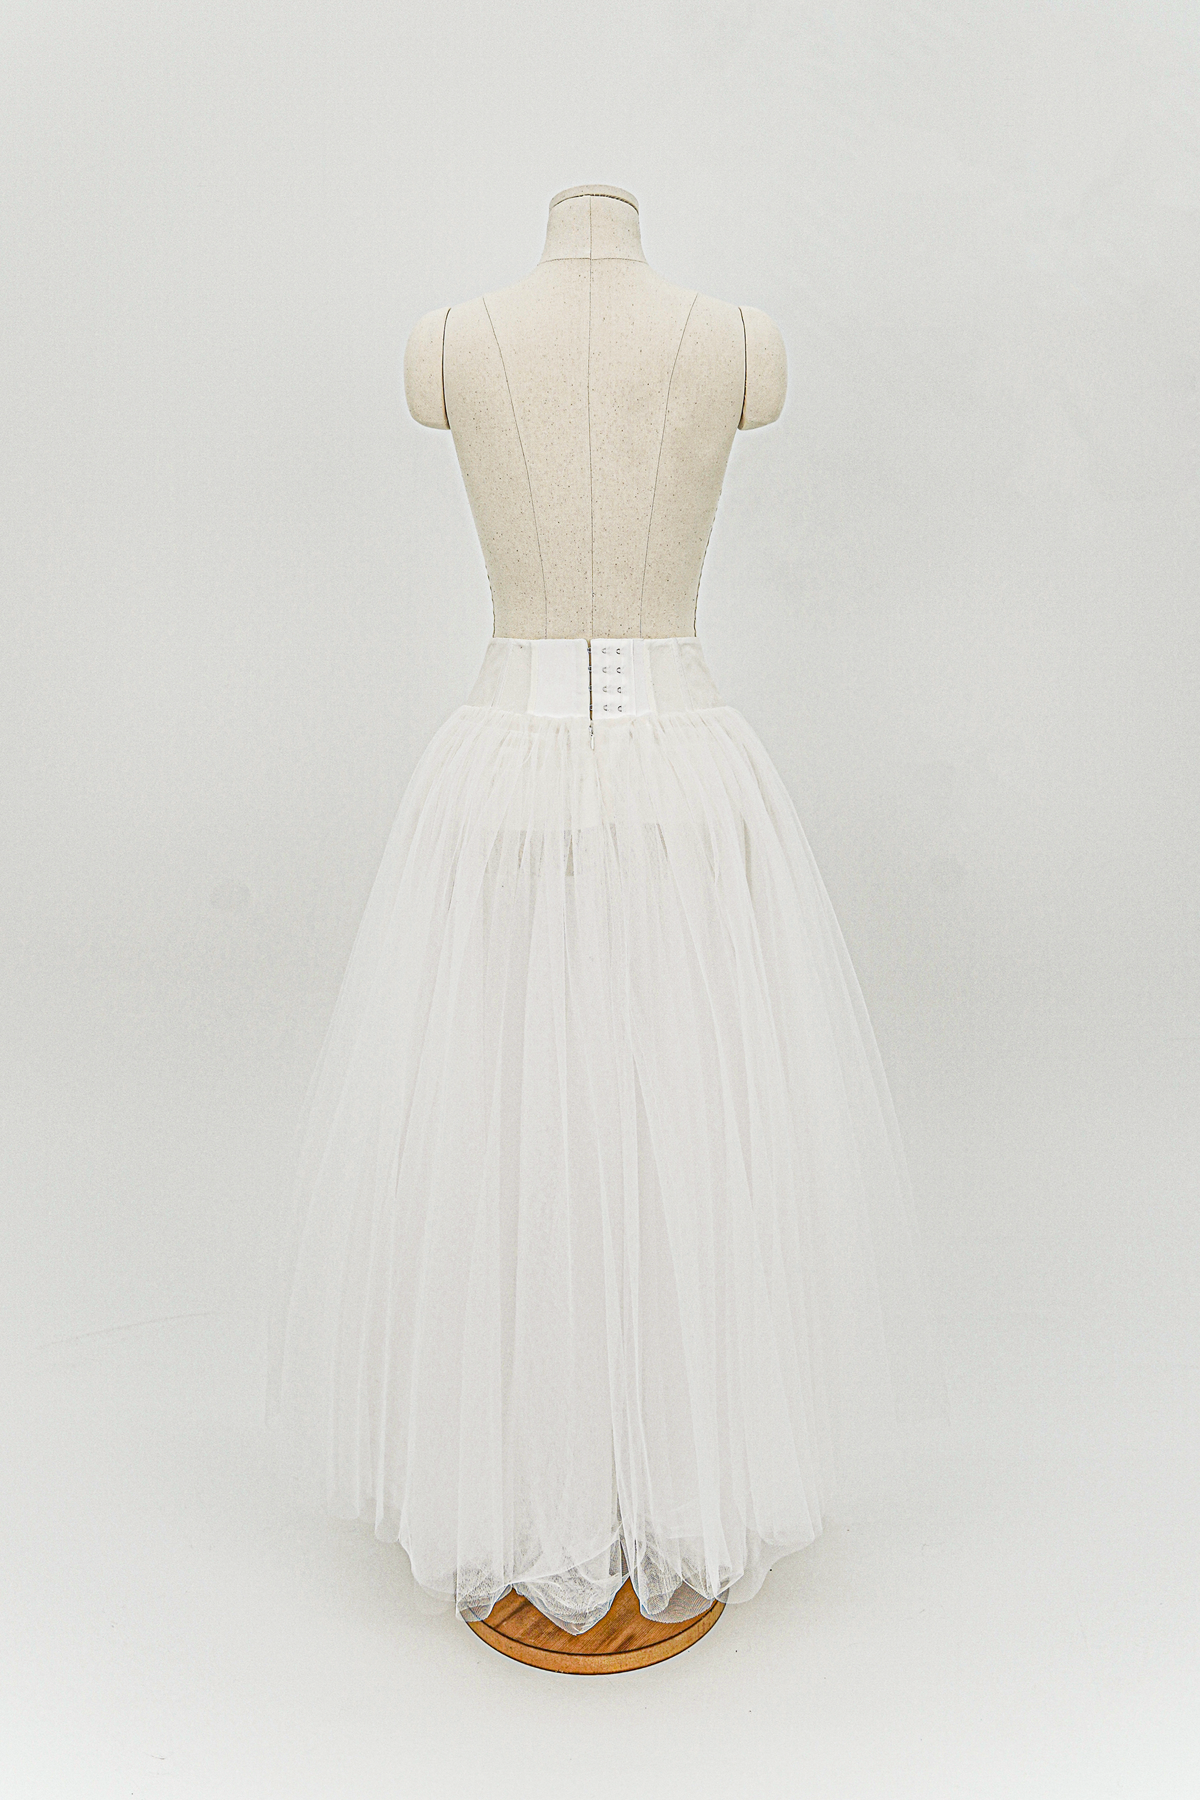 Romantic Tutu Skirt in swan white